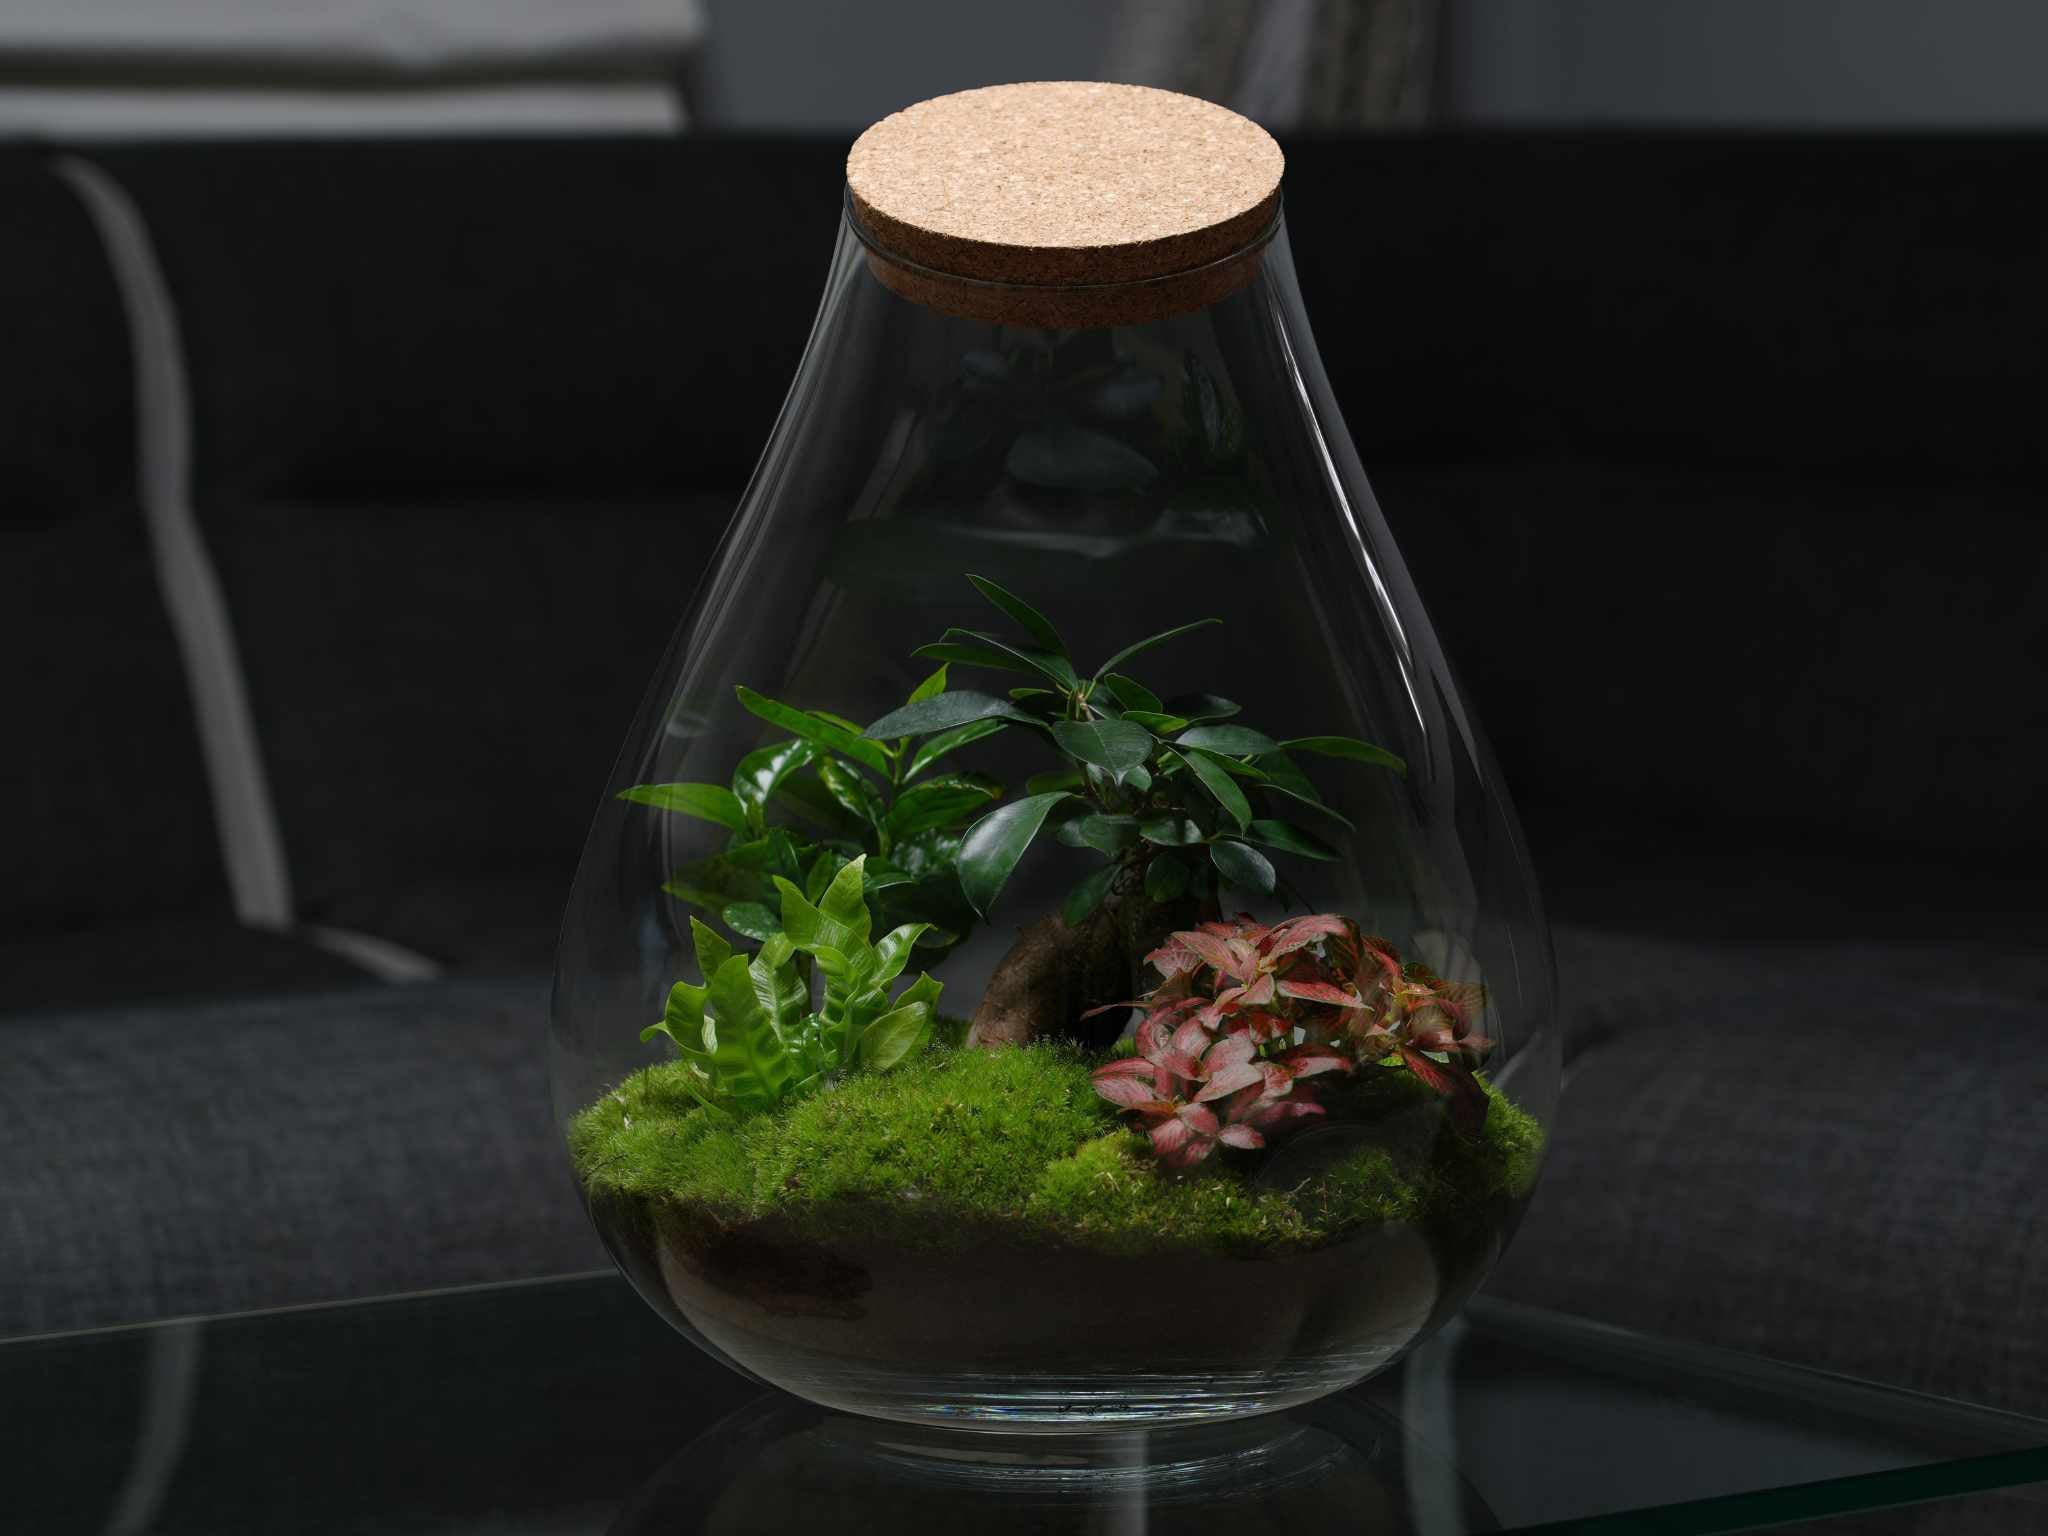 diy-terrarium-kit-with-plants